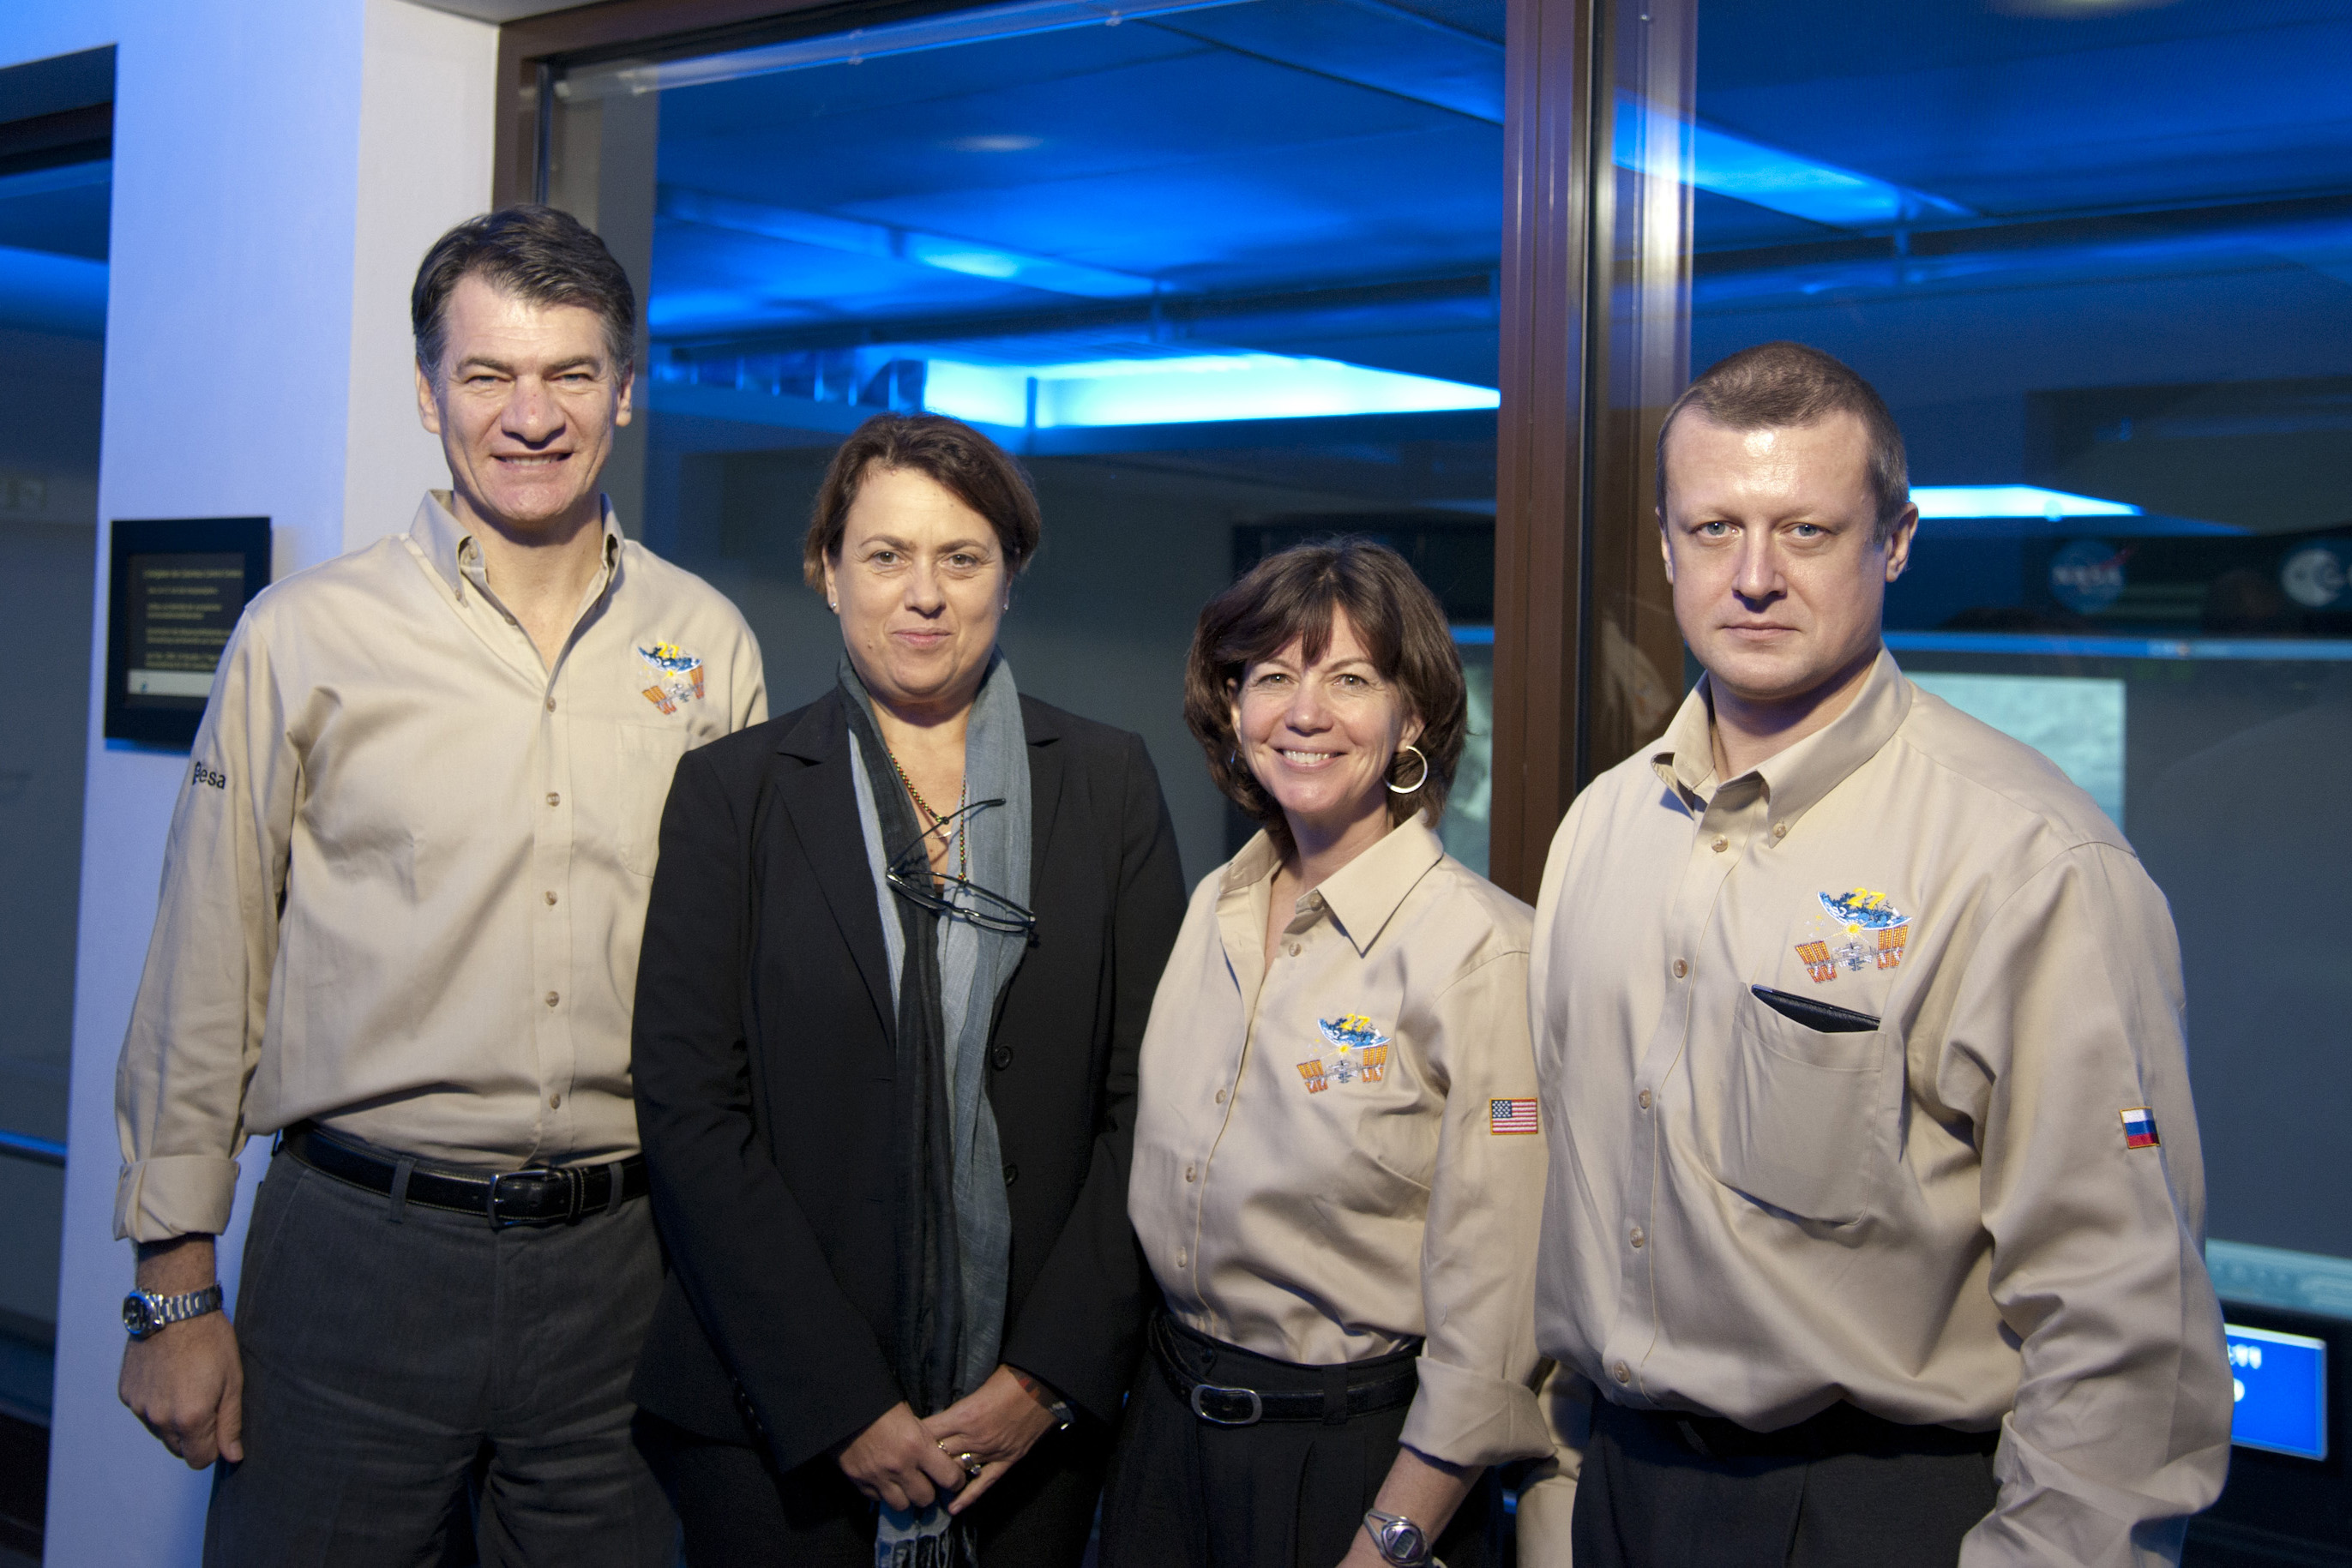 Esa Expedition 27 Crew With Simonetta Di Pippo Esa Director Of Human Spaceflight At Columbus 